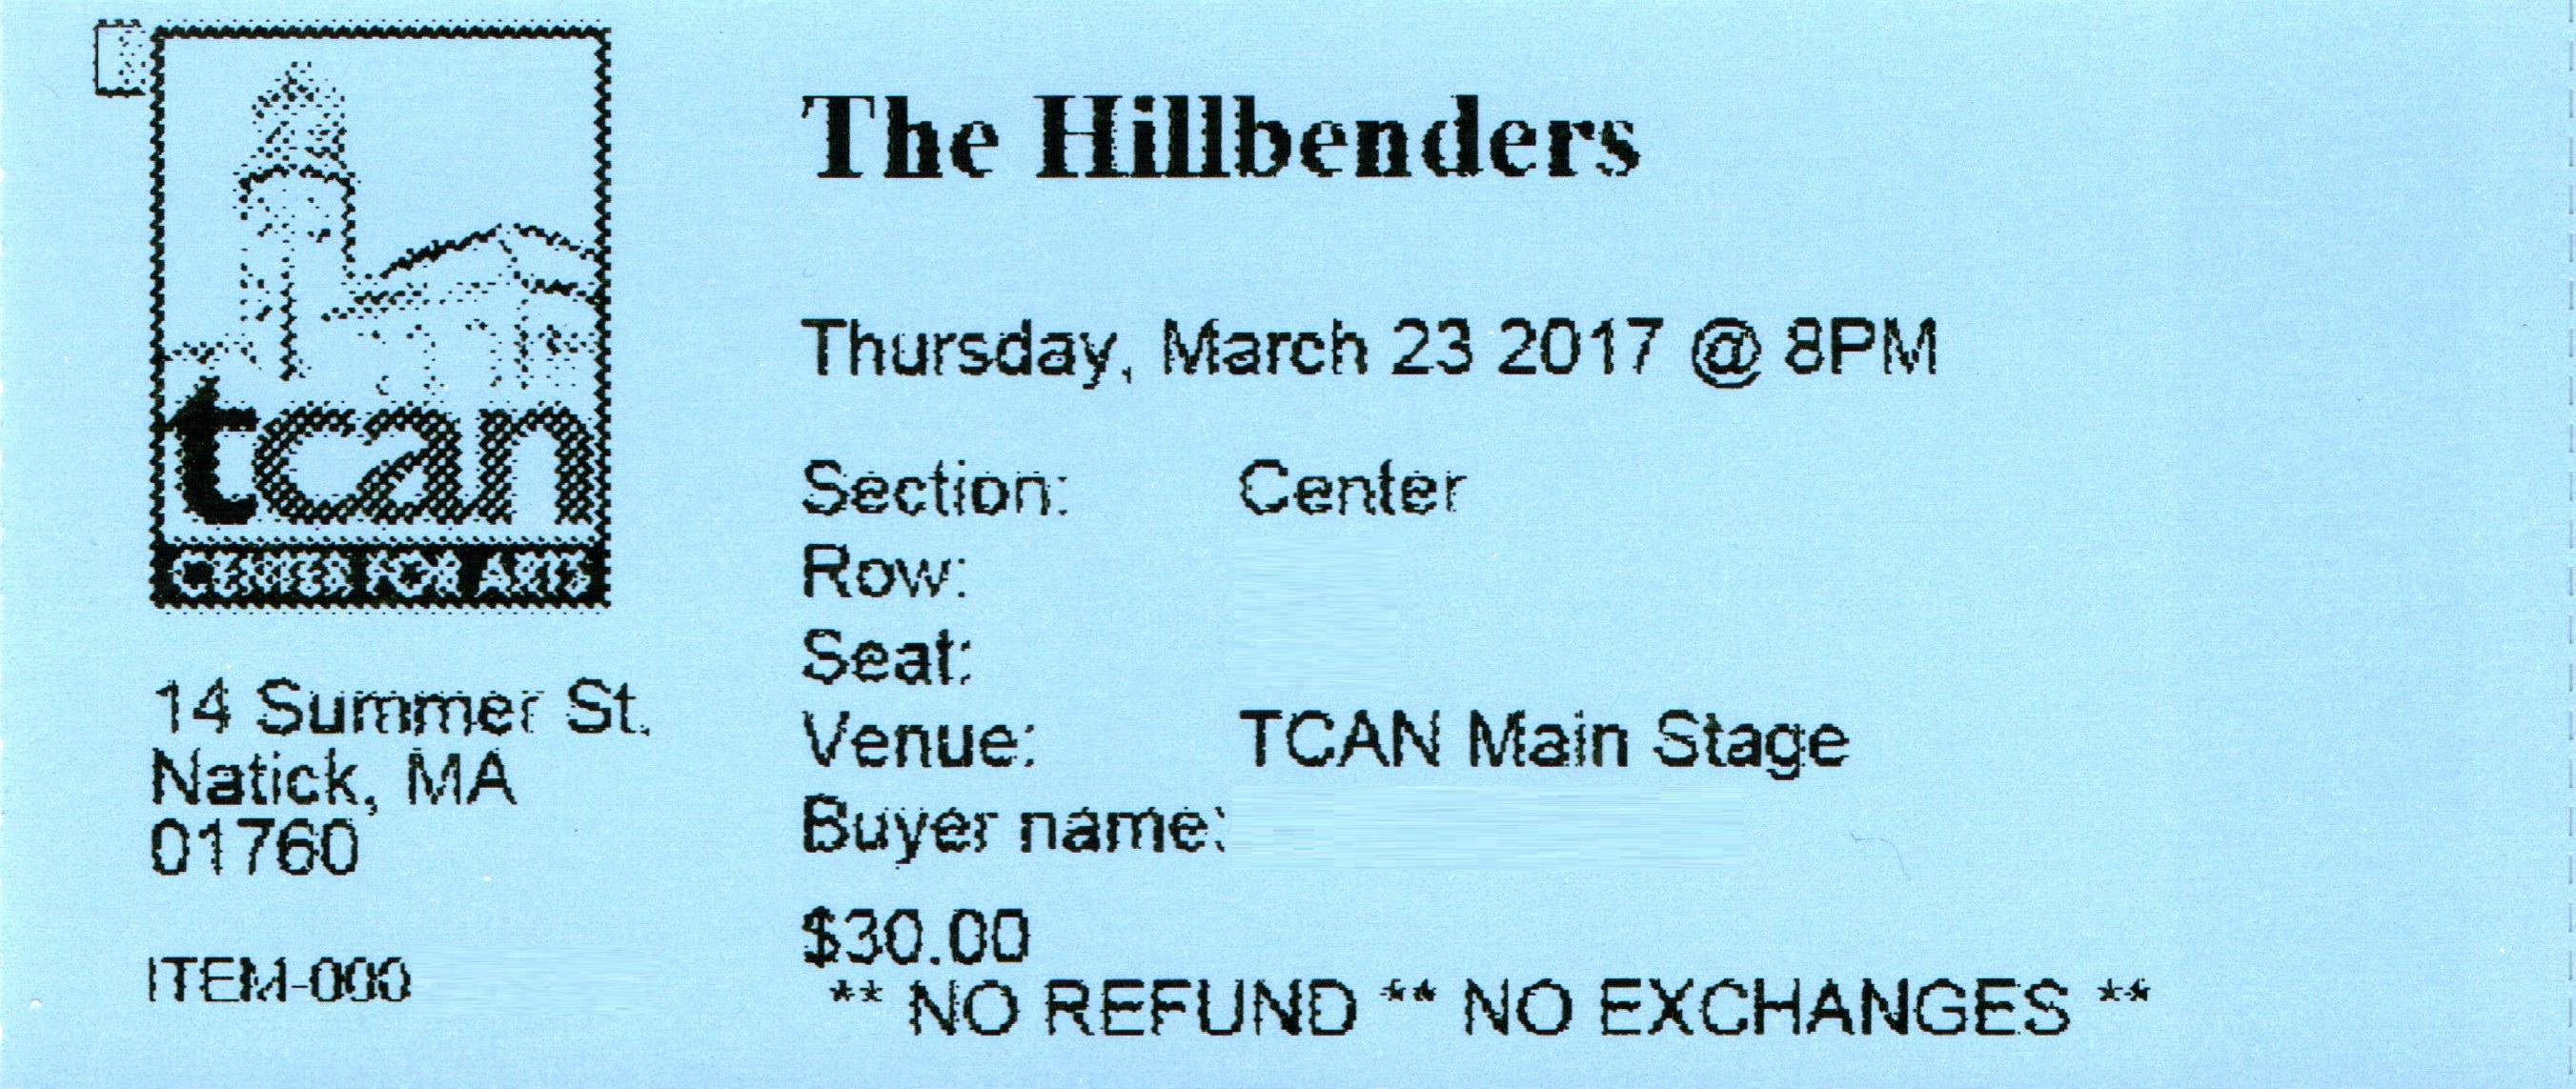 Hillbenders2017-03-23CenterForTheArtisNaticMA.jpg